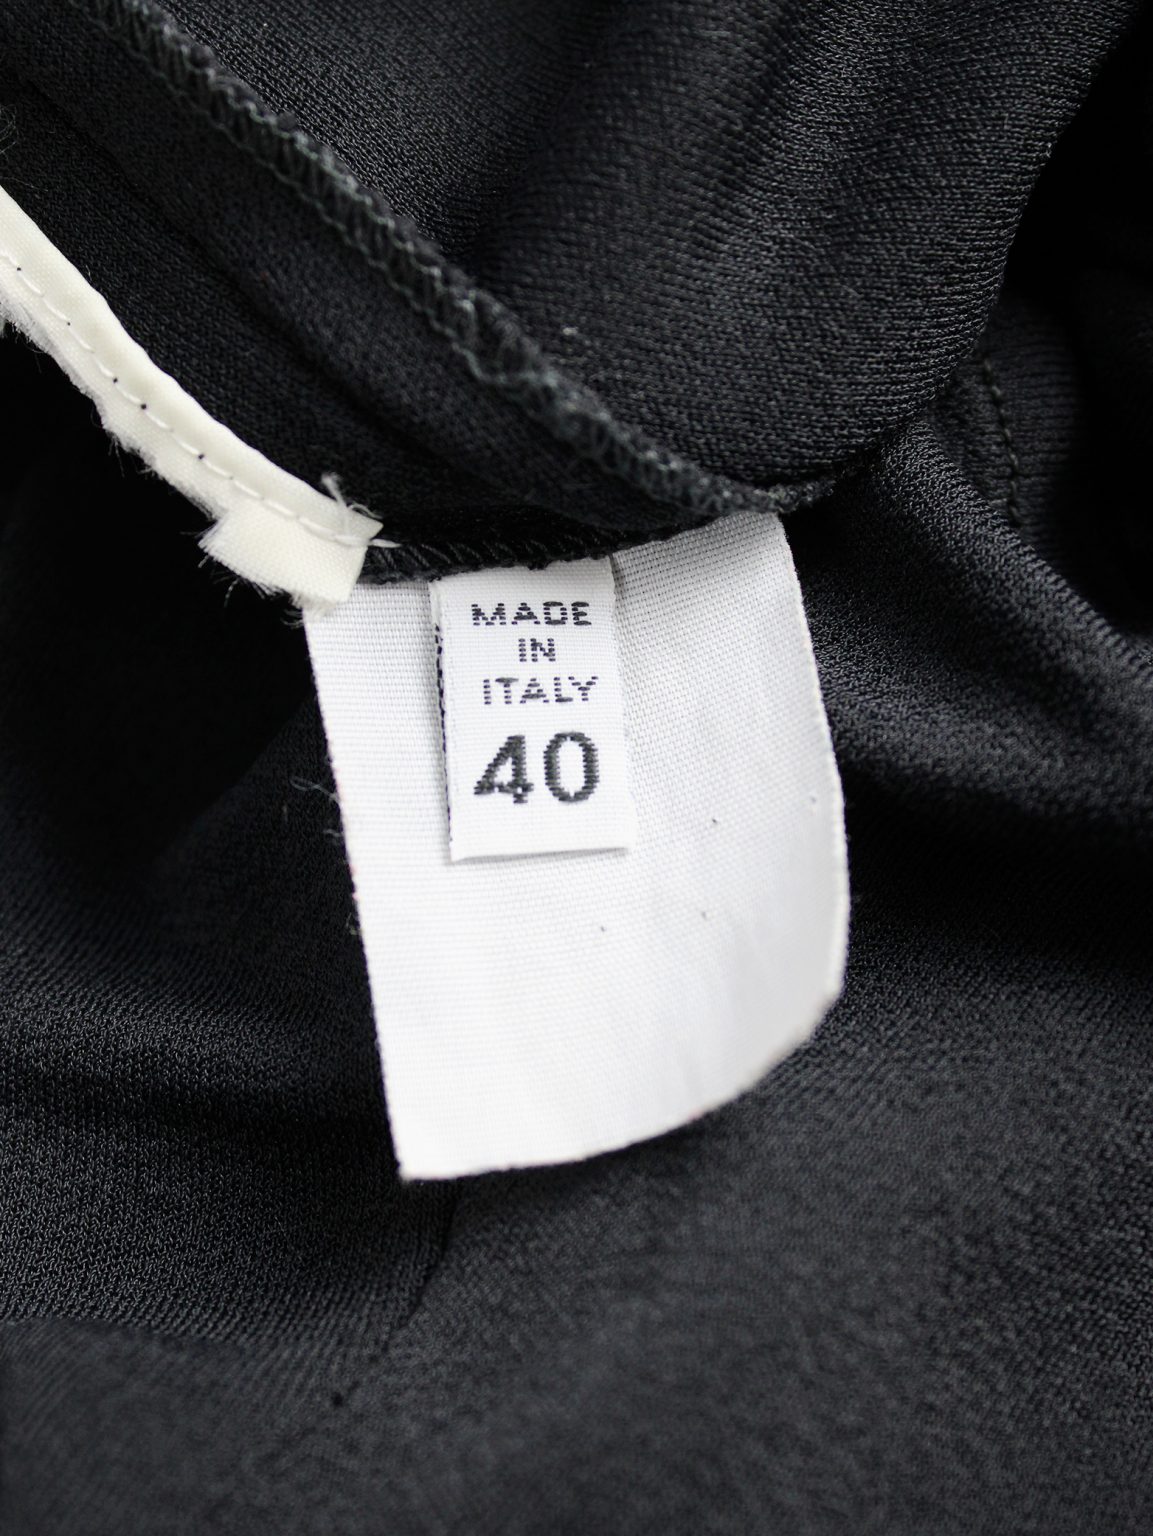 Maison Martin Margiela black jumper with cut-off neckline — 1996/1998